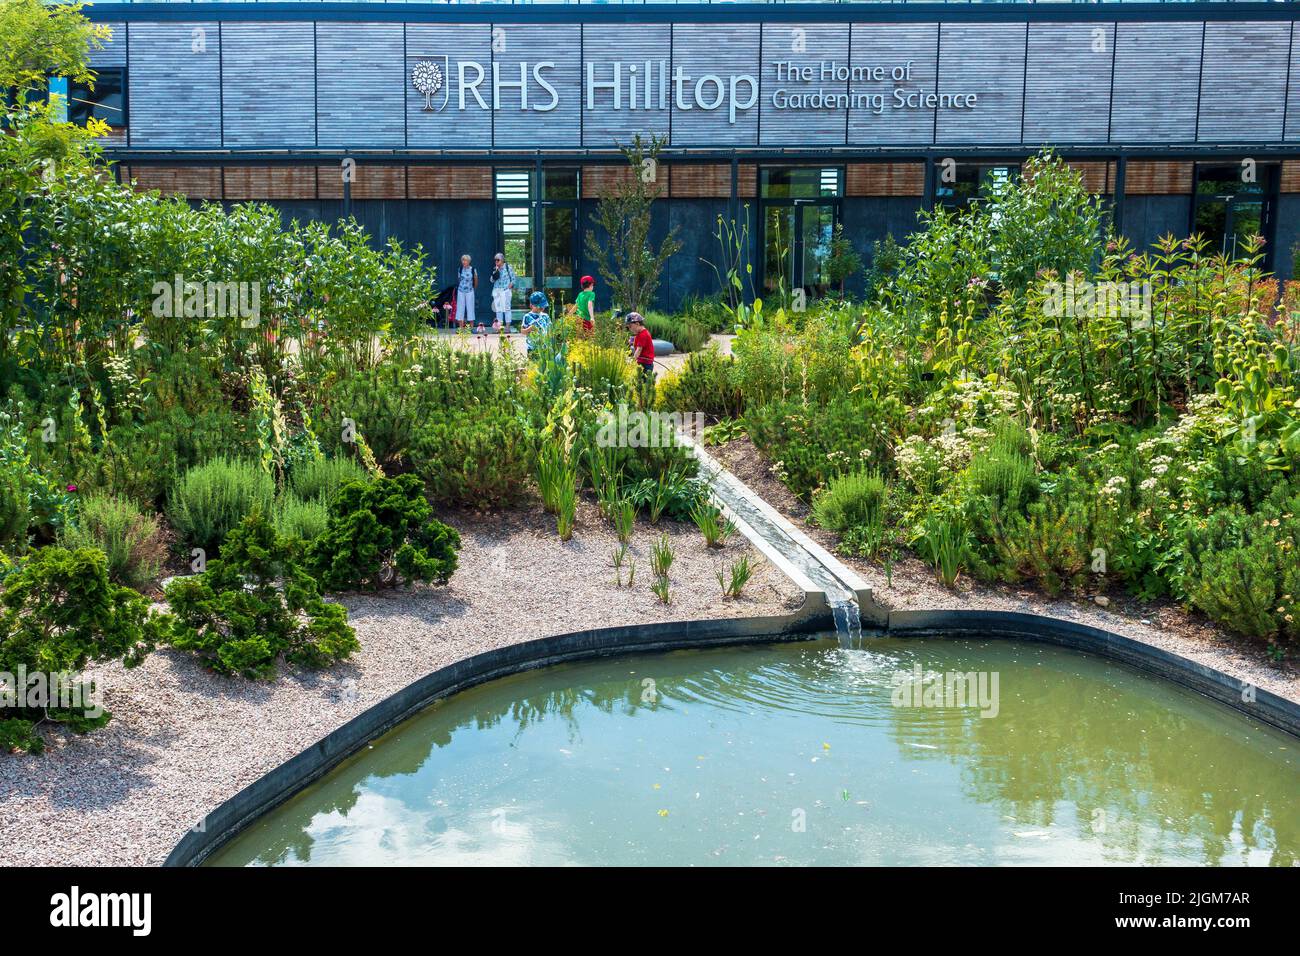 RHS Hilltop,le foyer de la Science du jardinage,RHS,Wisley,Angleterre Banque D'Images